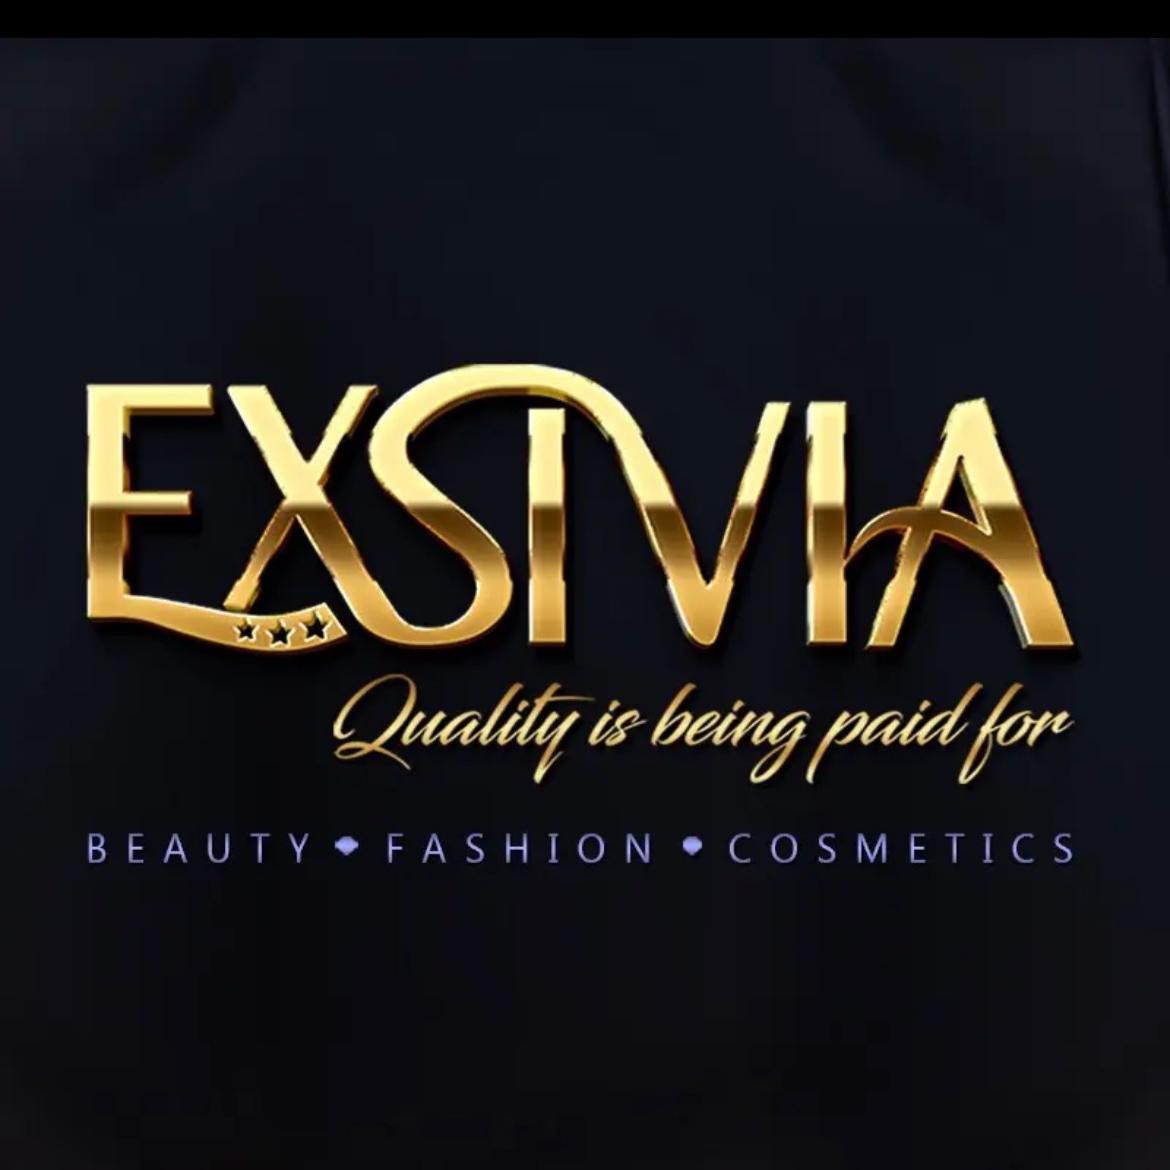 Exsivia Beauty's images